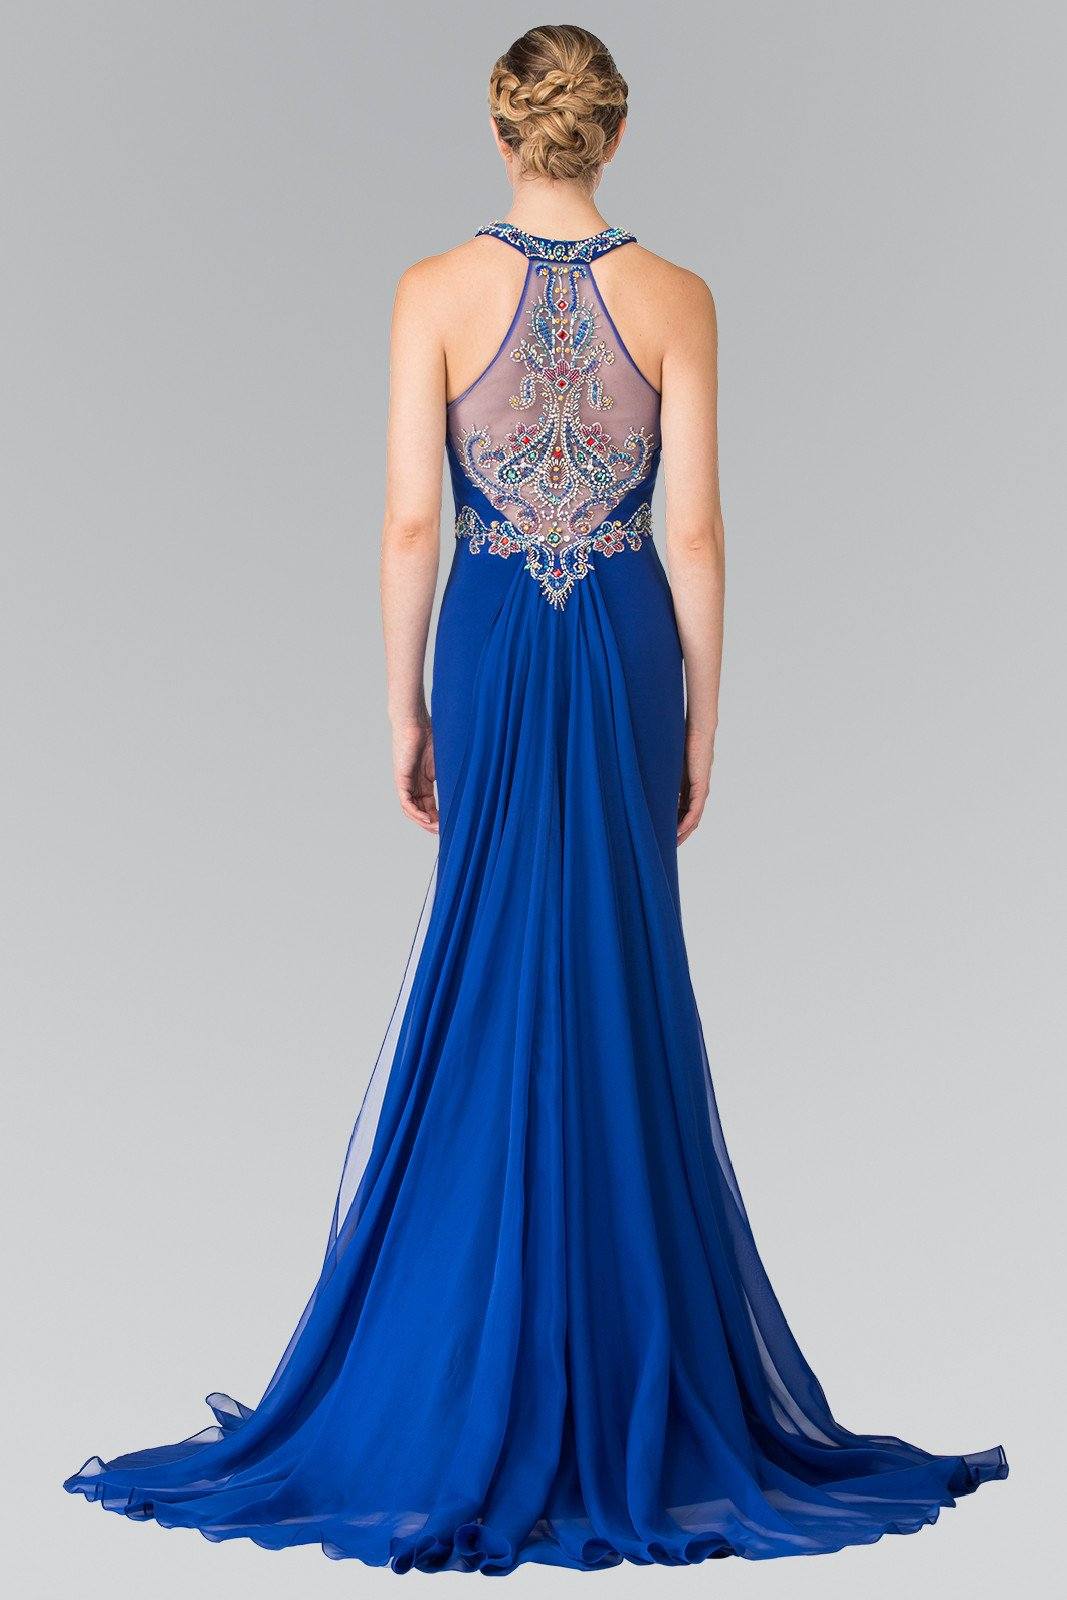 Long Beaded Halter Dress with Train by Elizabeth K GL2358-Long Formal Dresses-ABC Fashion